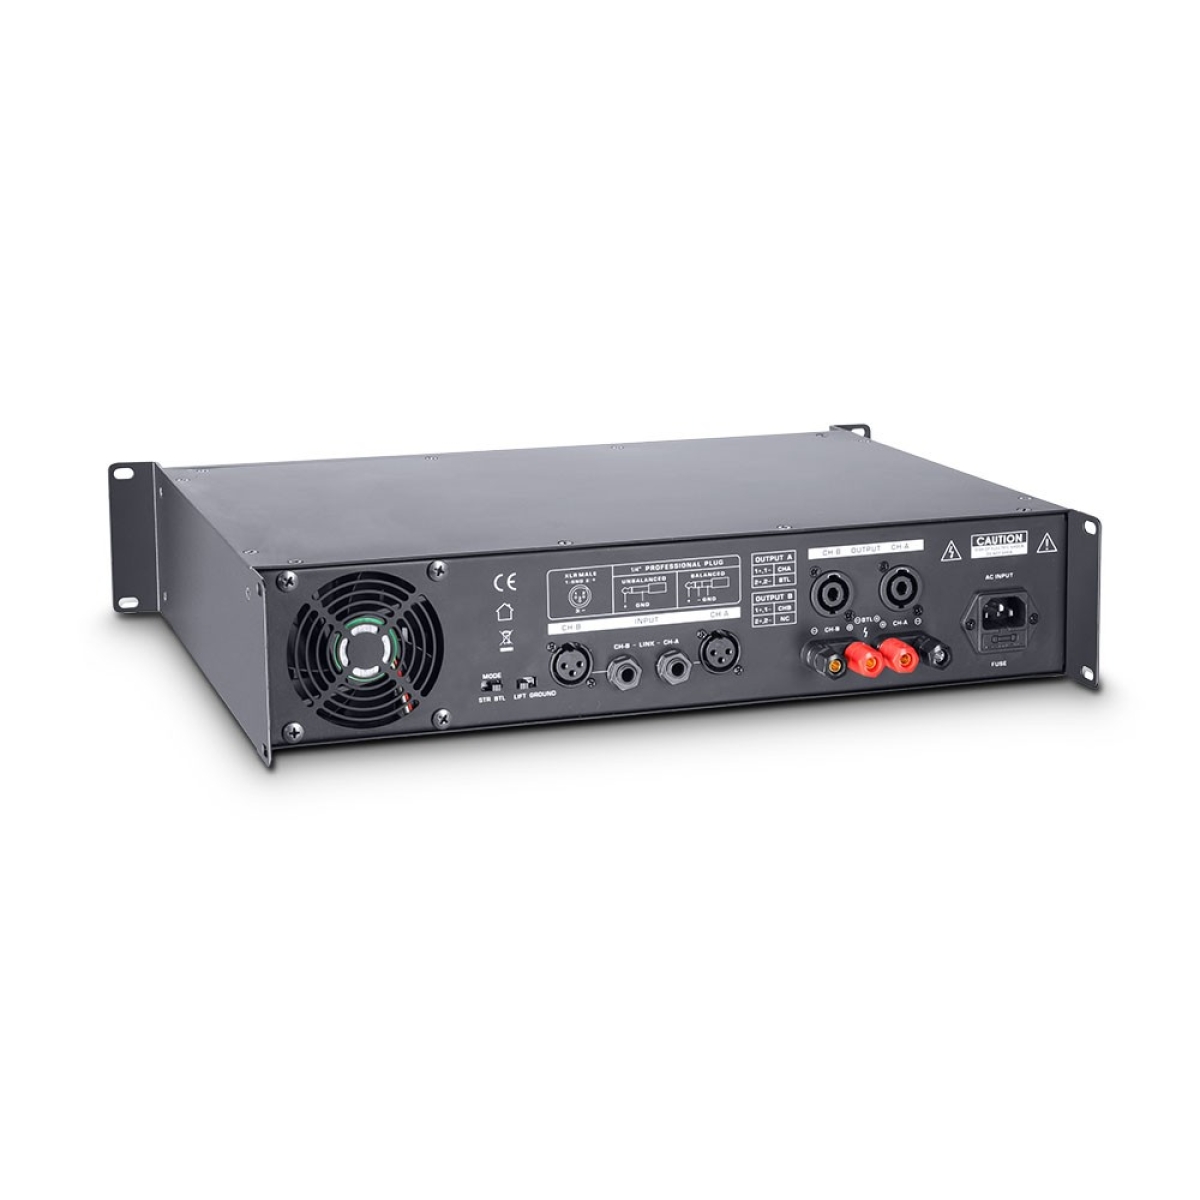 Мощность 500 дж. LD Systems dj500 Power Amplifier. LD Systems DJ 500. М500 Power Amplifier цена Тюмень.